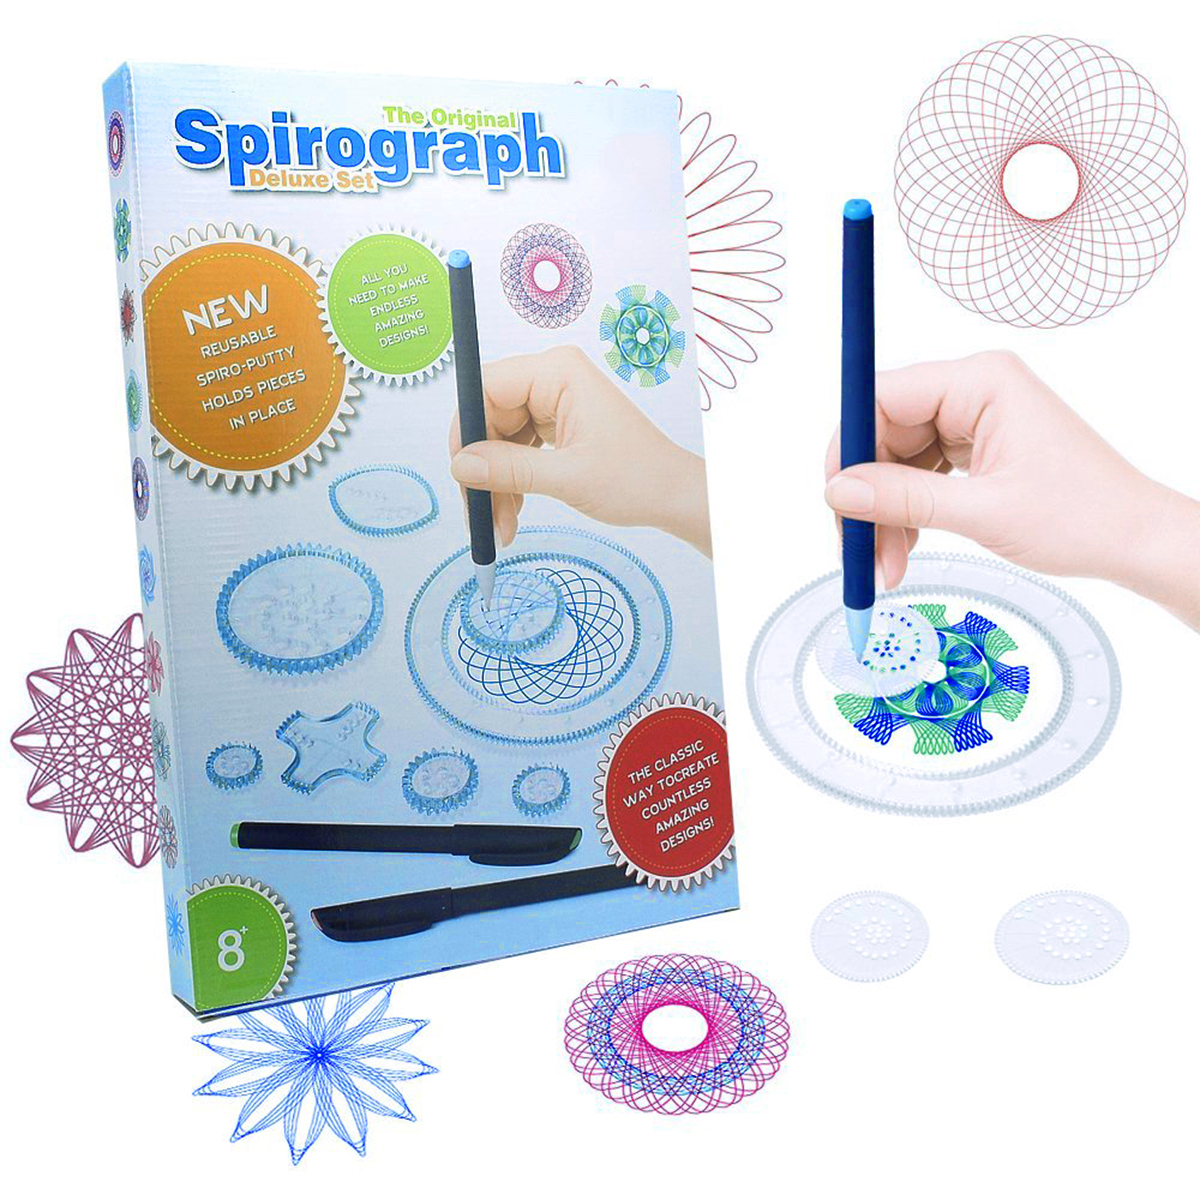 Original Spirograph Design Set Geometric Drawing Ruler Kids Spiral Art Craft Creation Education Toy 17